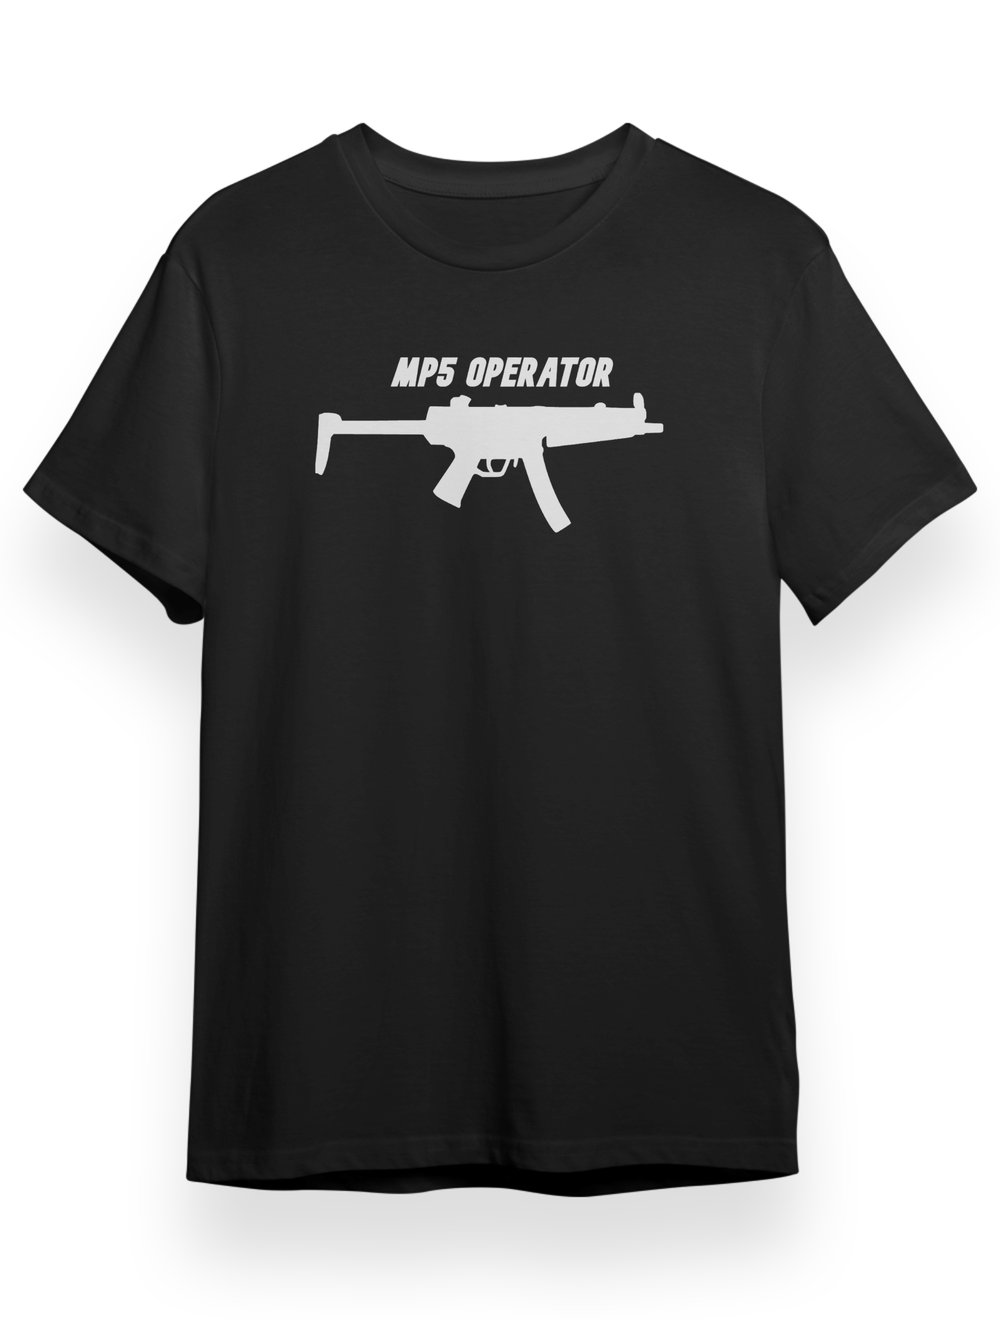 MP5 OPERATOR